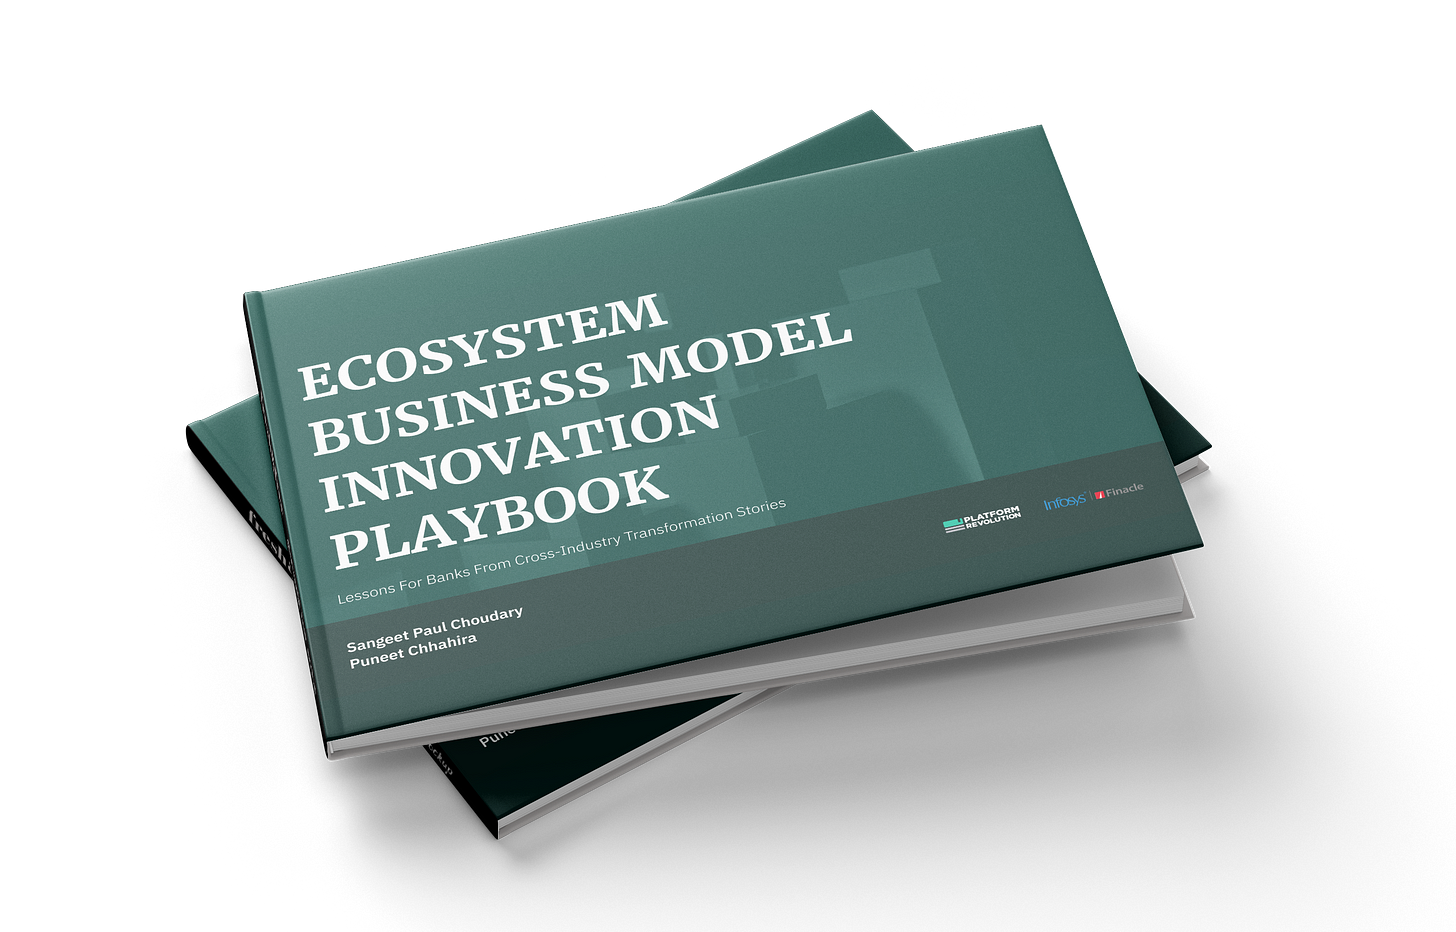 Ecosystem Business Models: A teardown